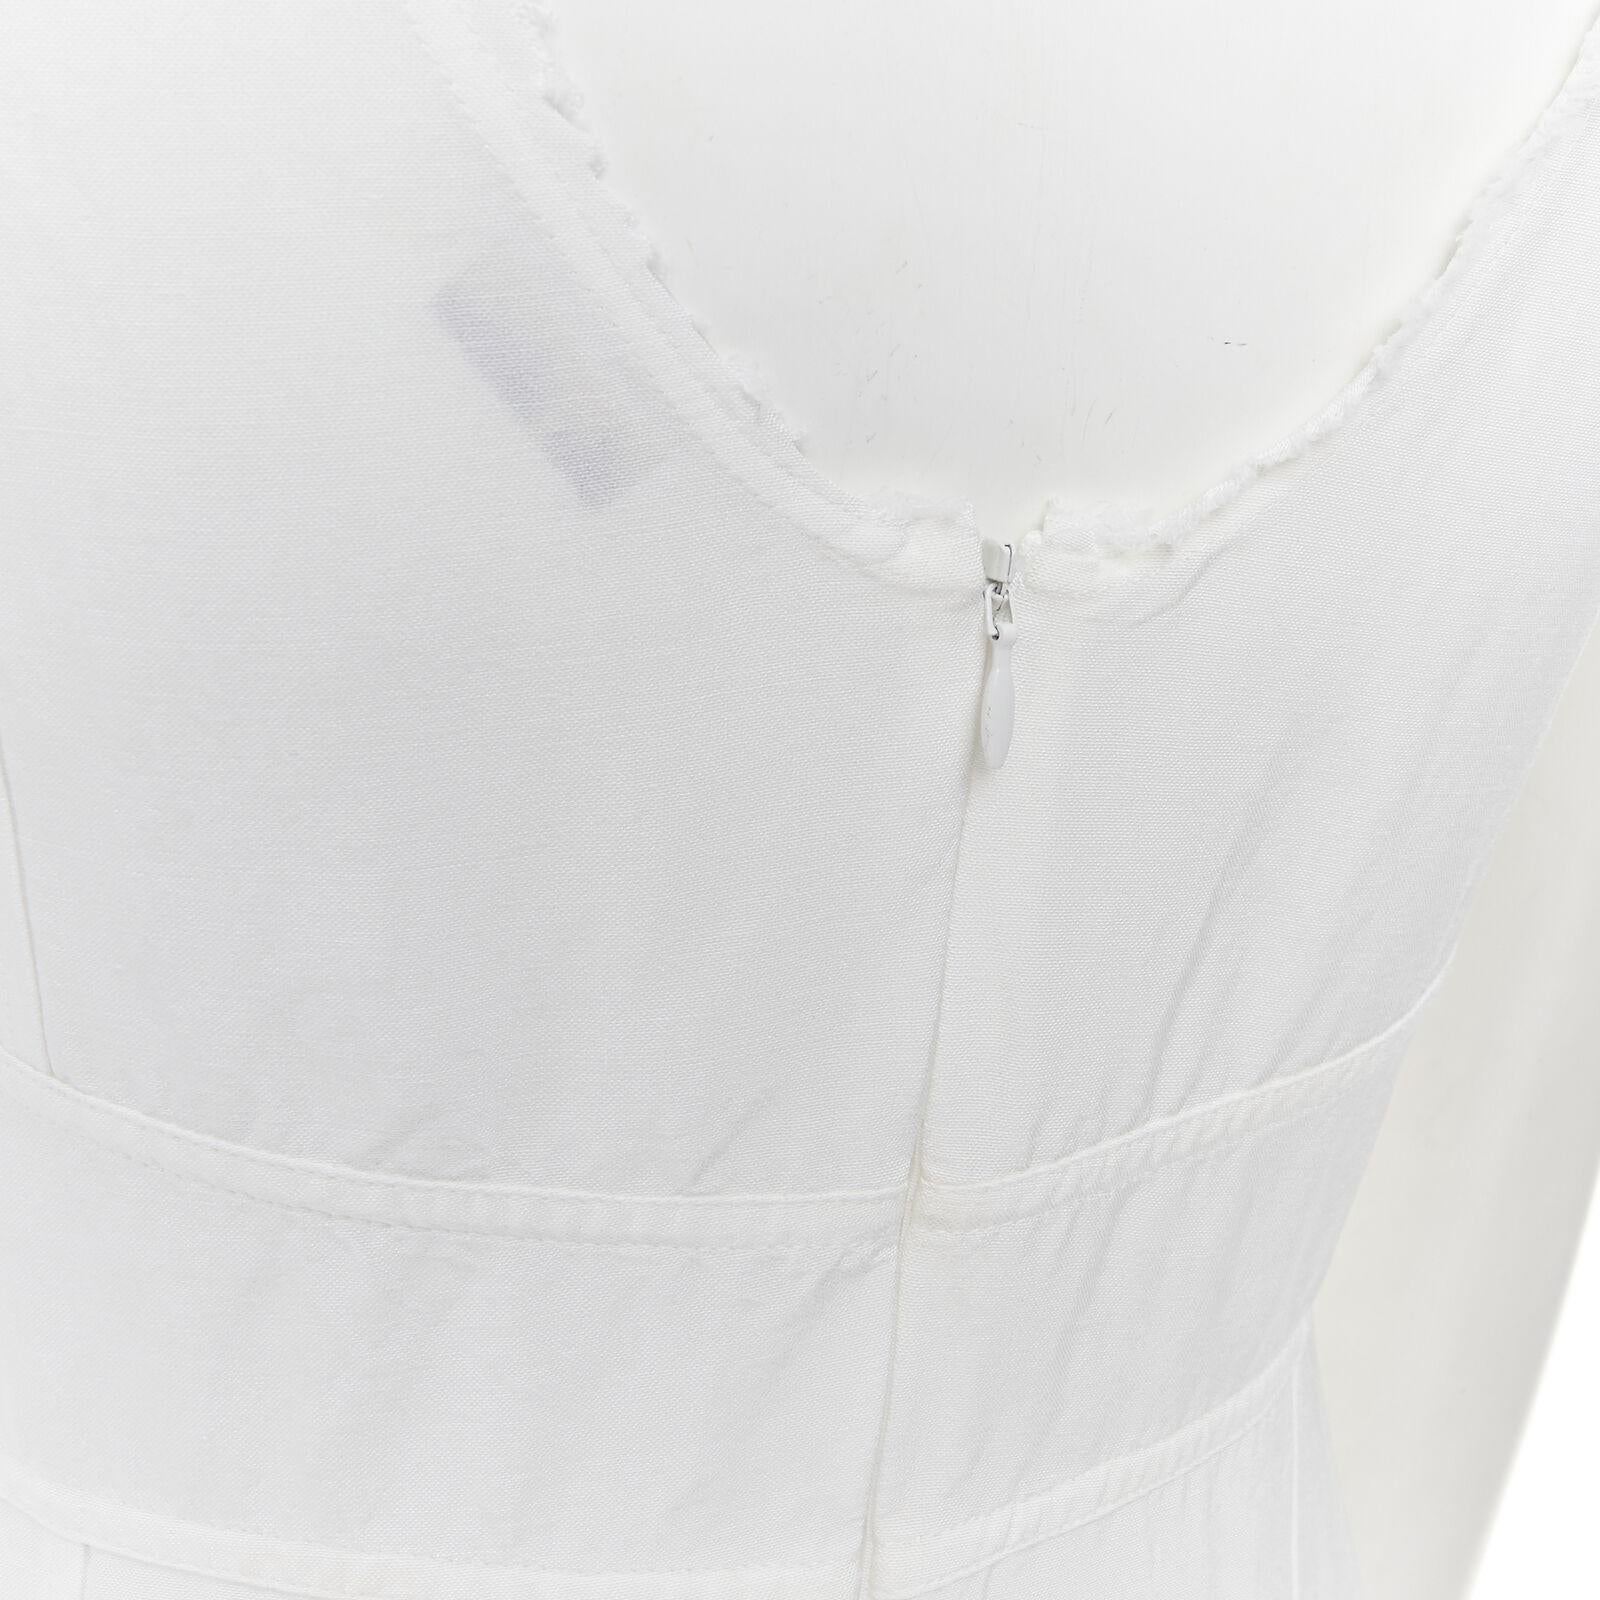 new CELINE PHOEBE PHILO 2017 Yves Klein body print cotton dress FR34 XS 2